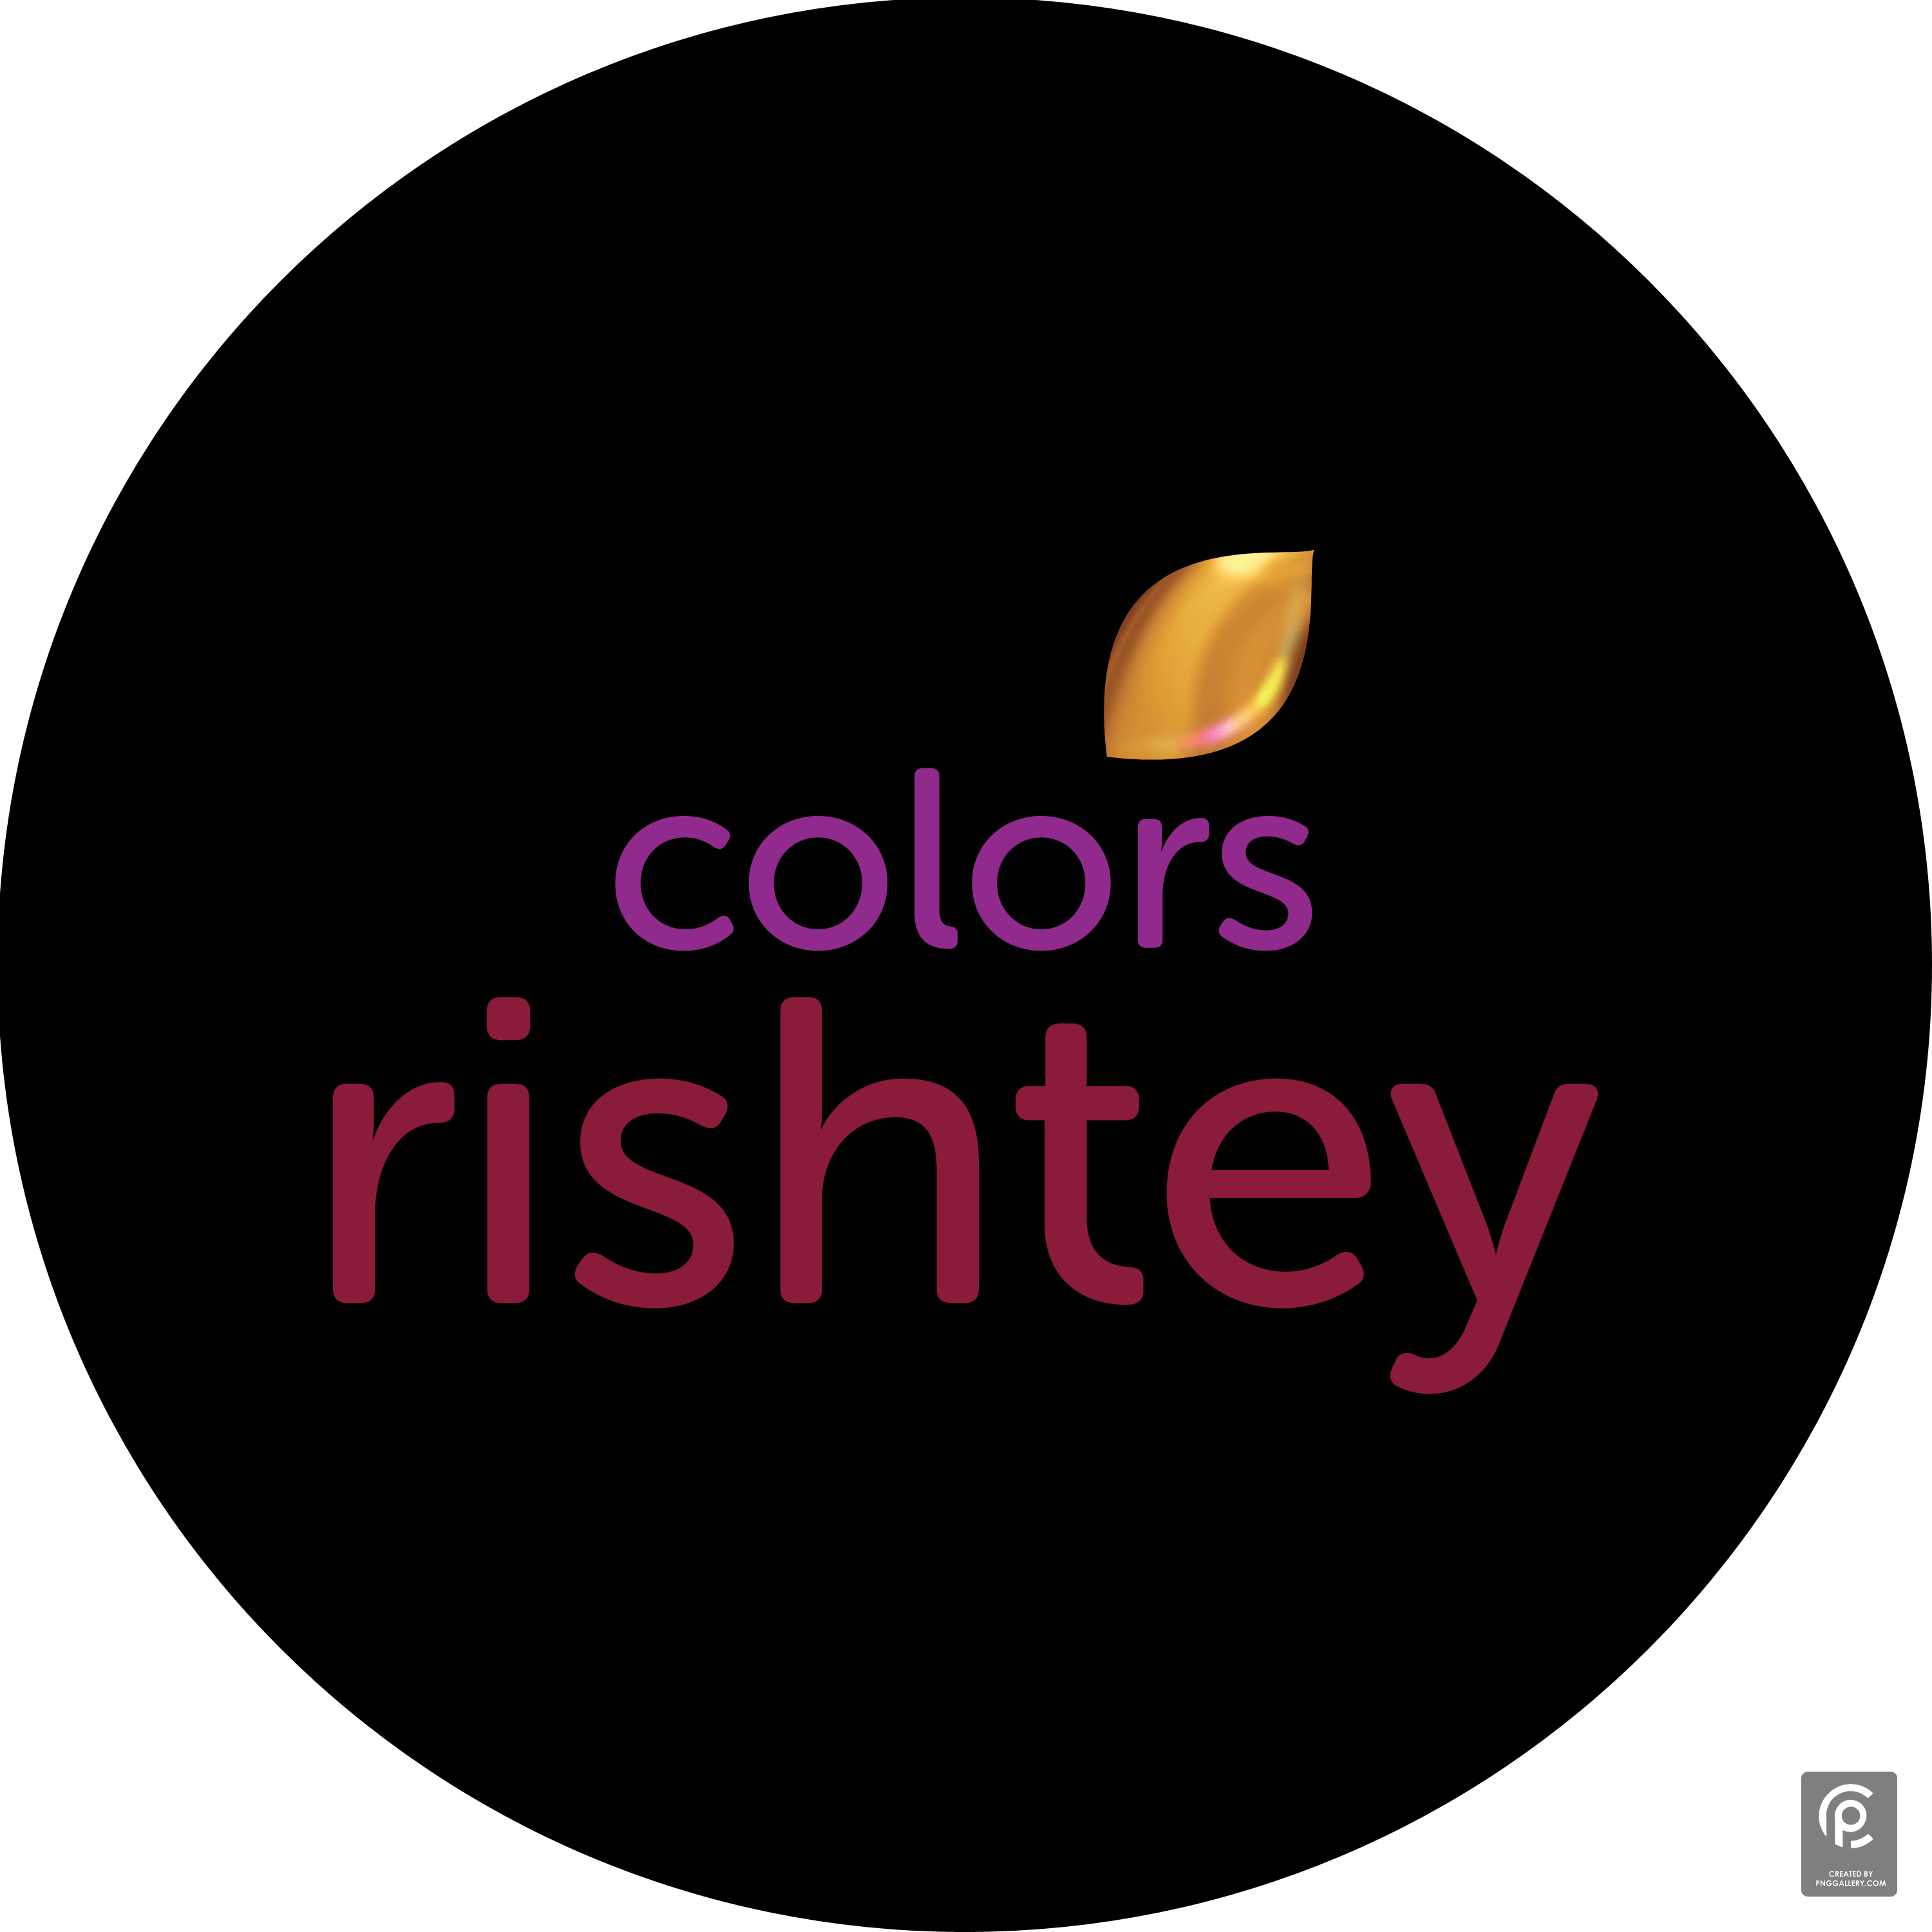 Colors Rishtey logo Transparent Gallery